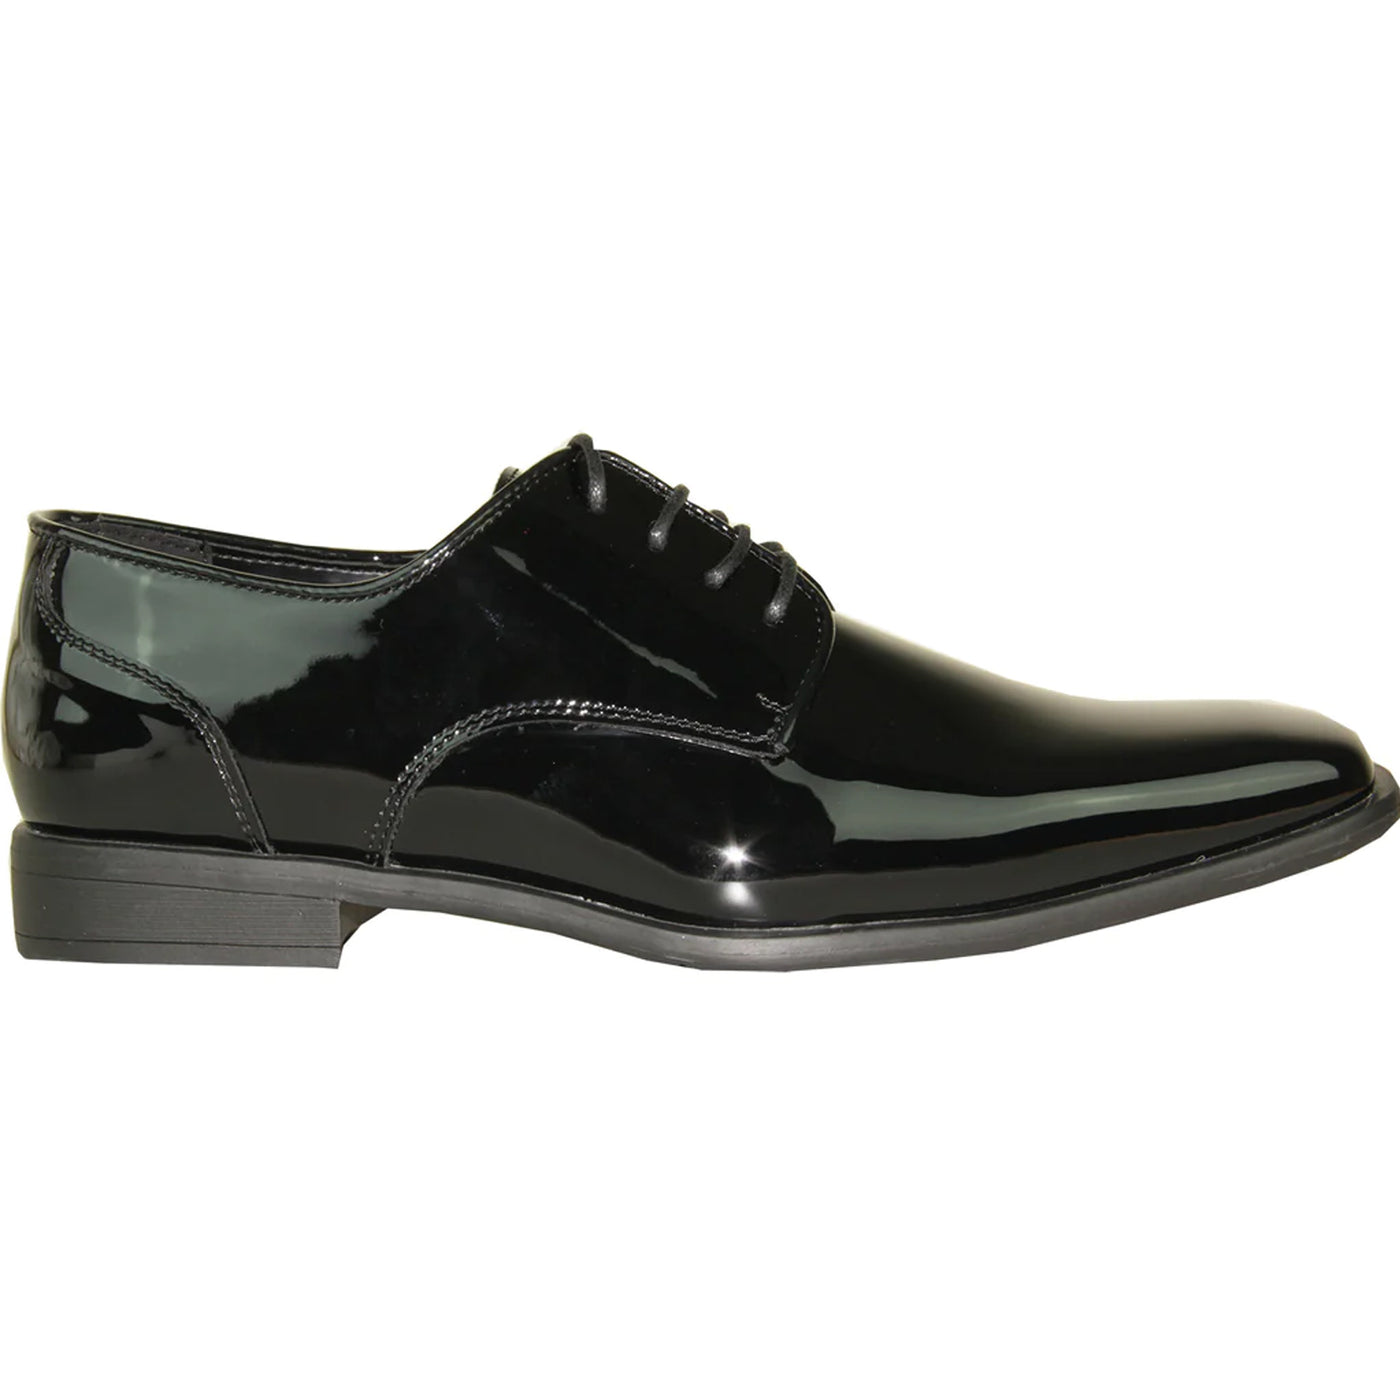 Mens Modern Pointy Square Toe Oxford Patent Tuxedo Shoe in Black